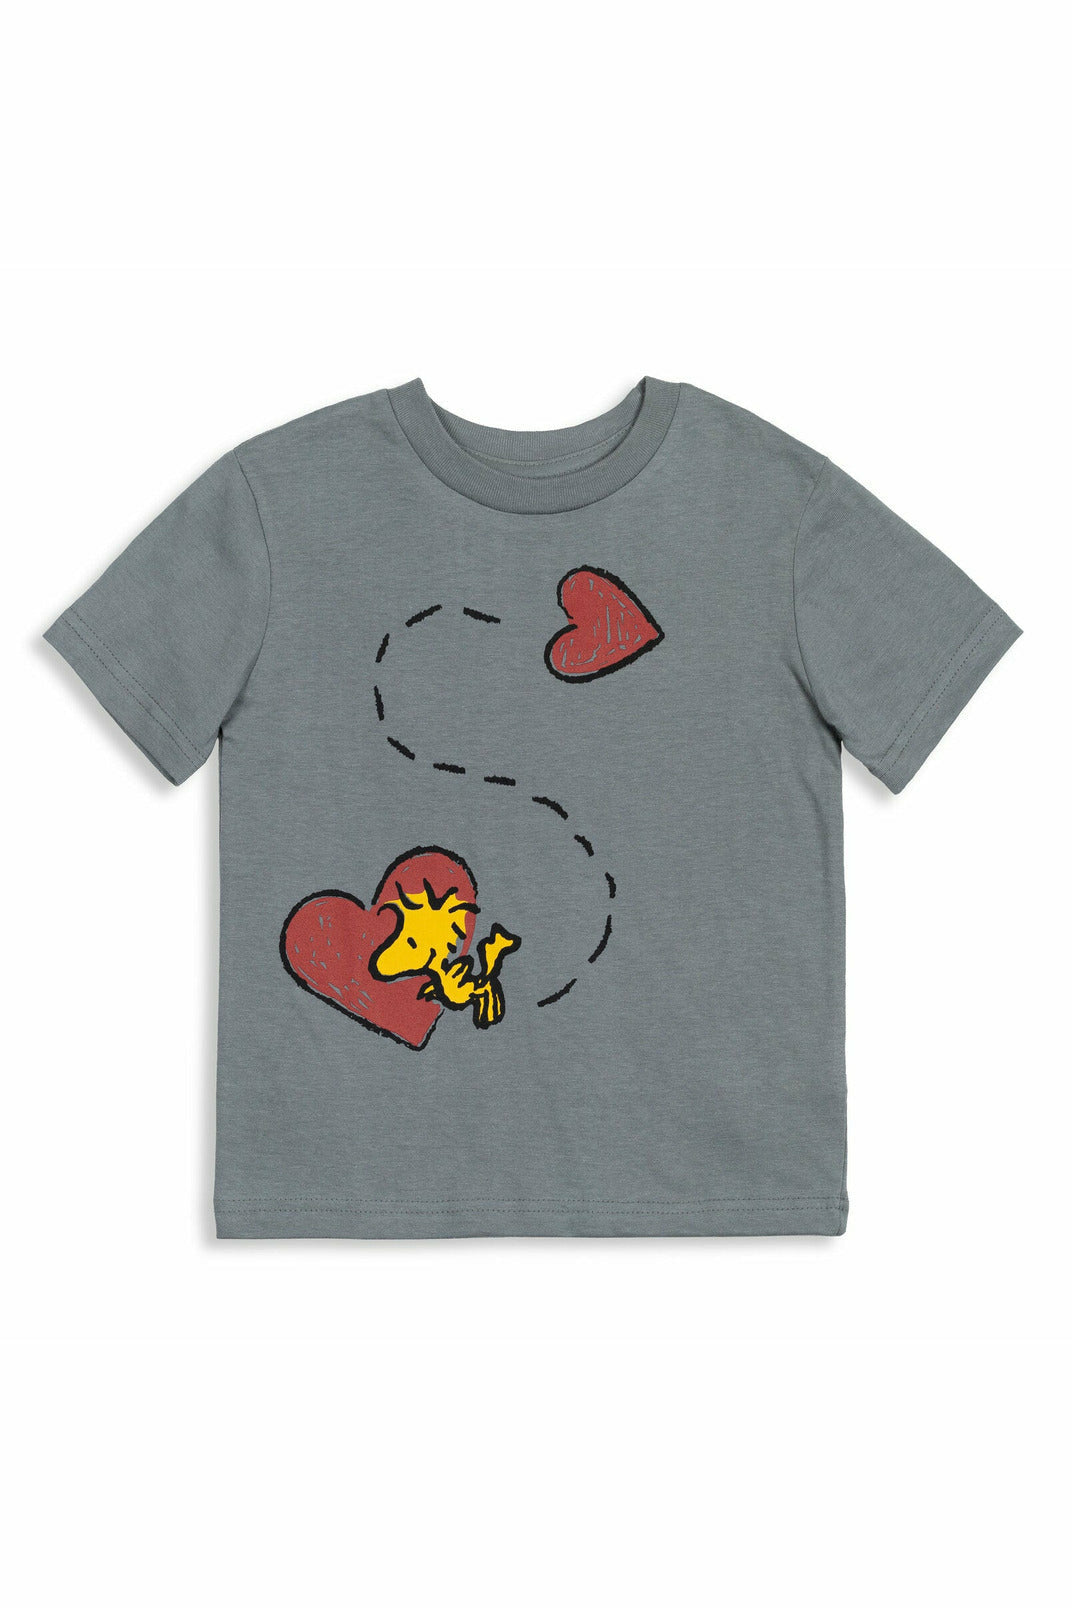 Peanuts Graphic T-shirt